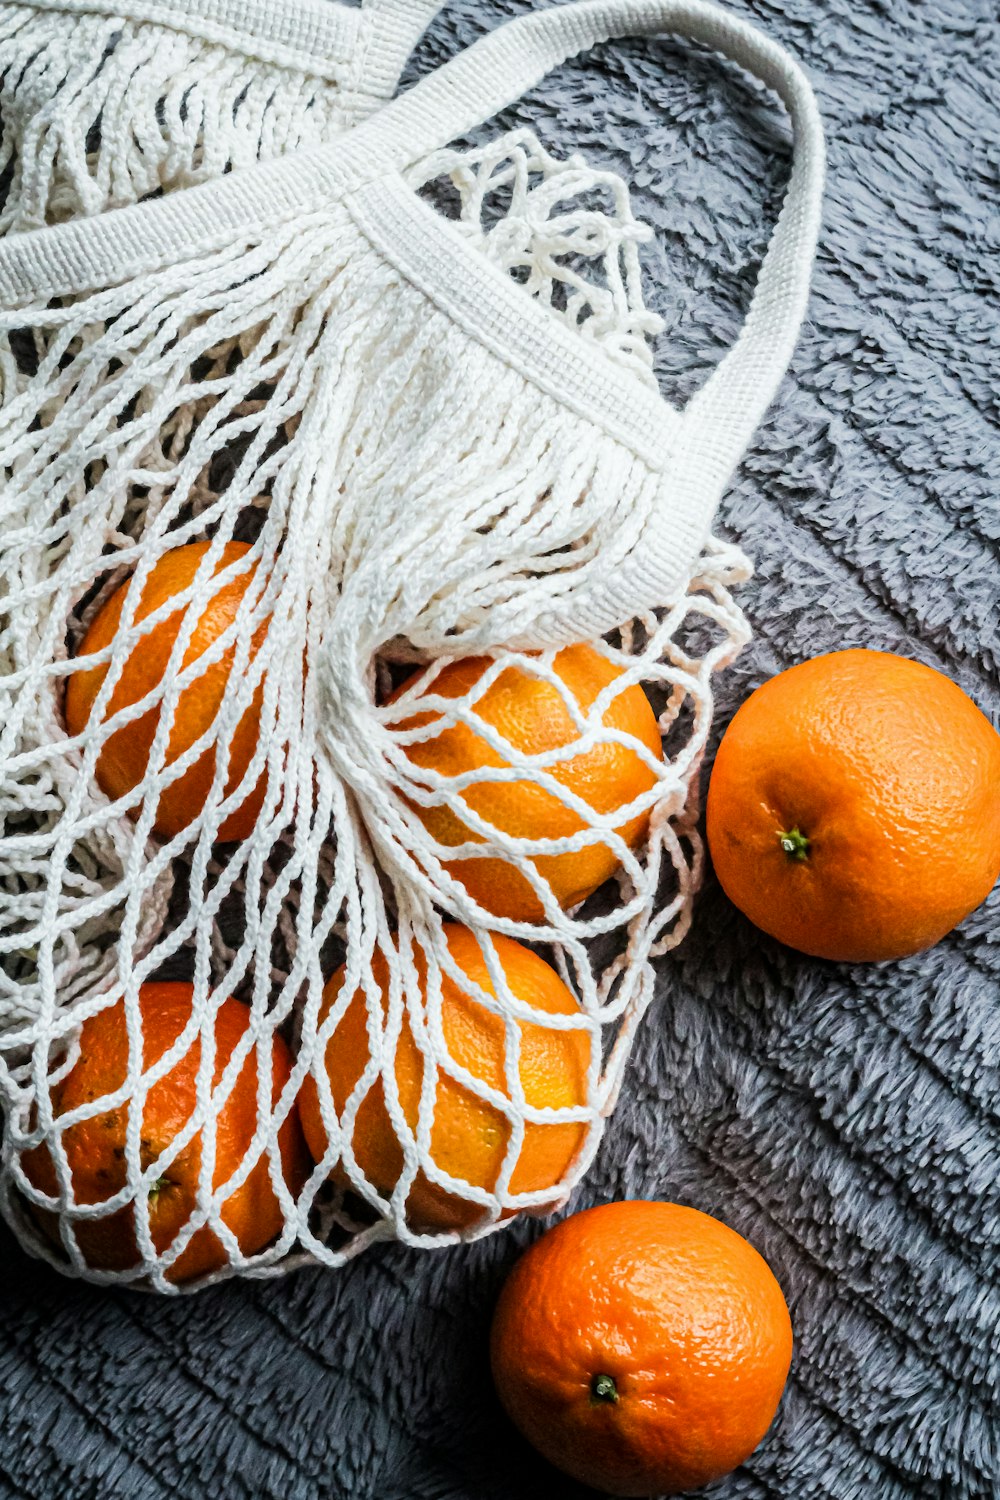 orange fruits on gray knit textile